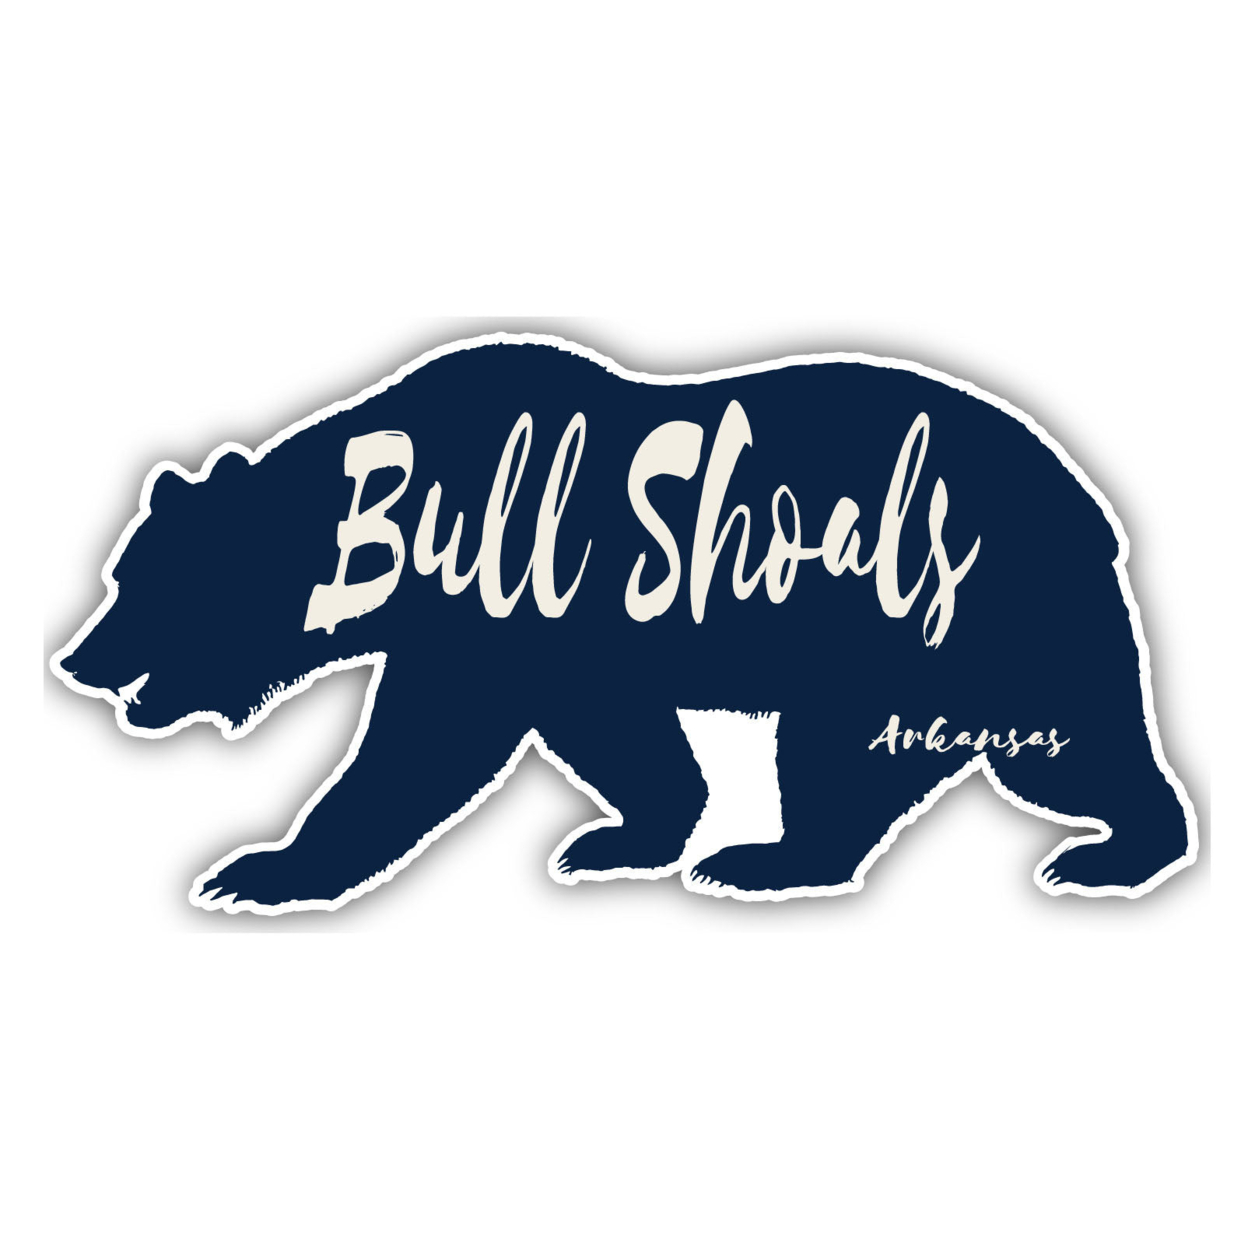 Bull Shoals Arkansas Souvenir Decorative Stickers (Choose Theme And Size) - Single Unit, 12-Inch, Adventures Awaits